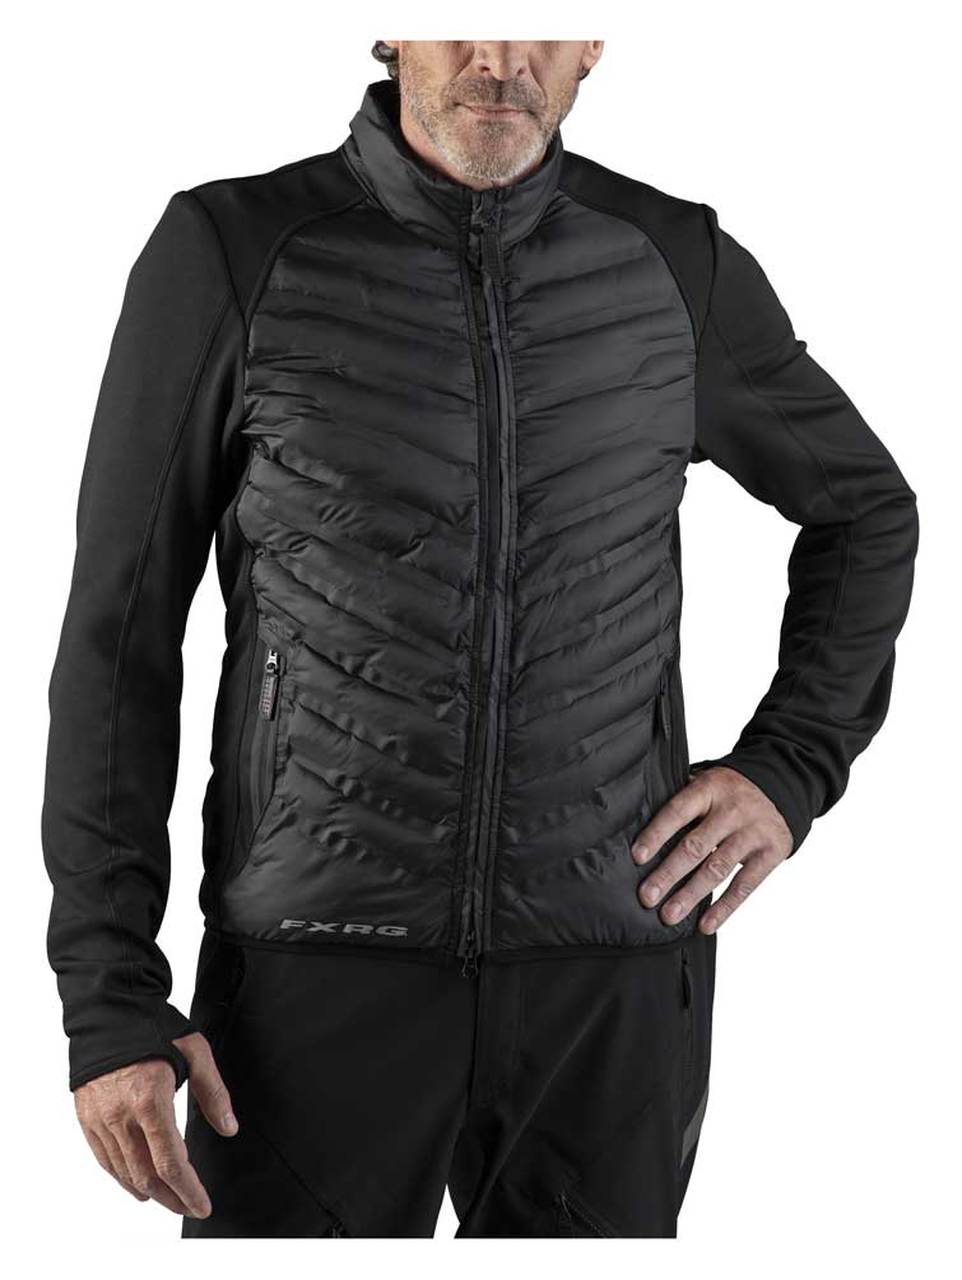 Harley-Davidson® Men’s FXRG Thinsulate Mid-Layer Jacket, Black